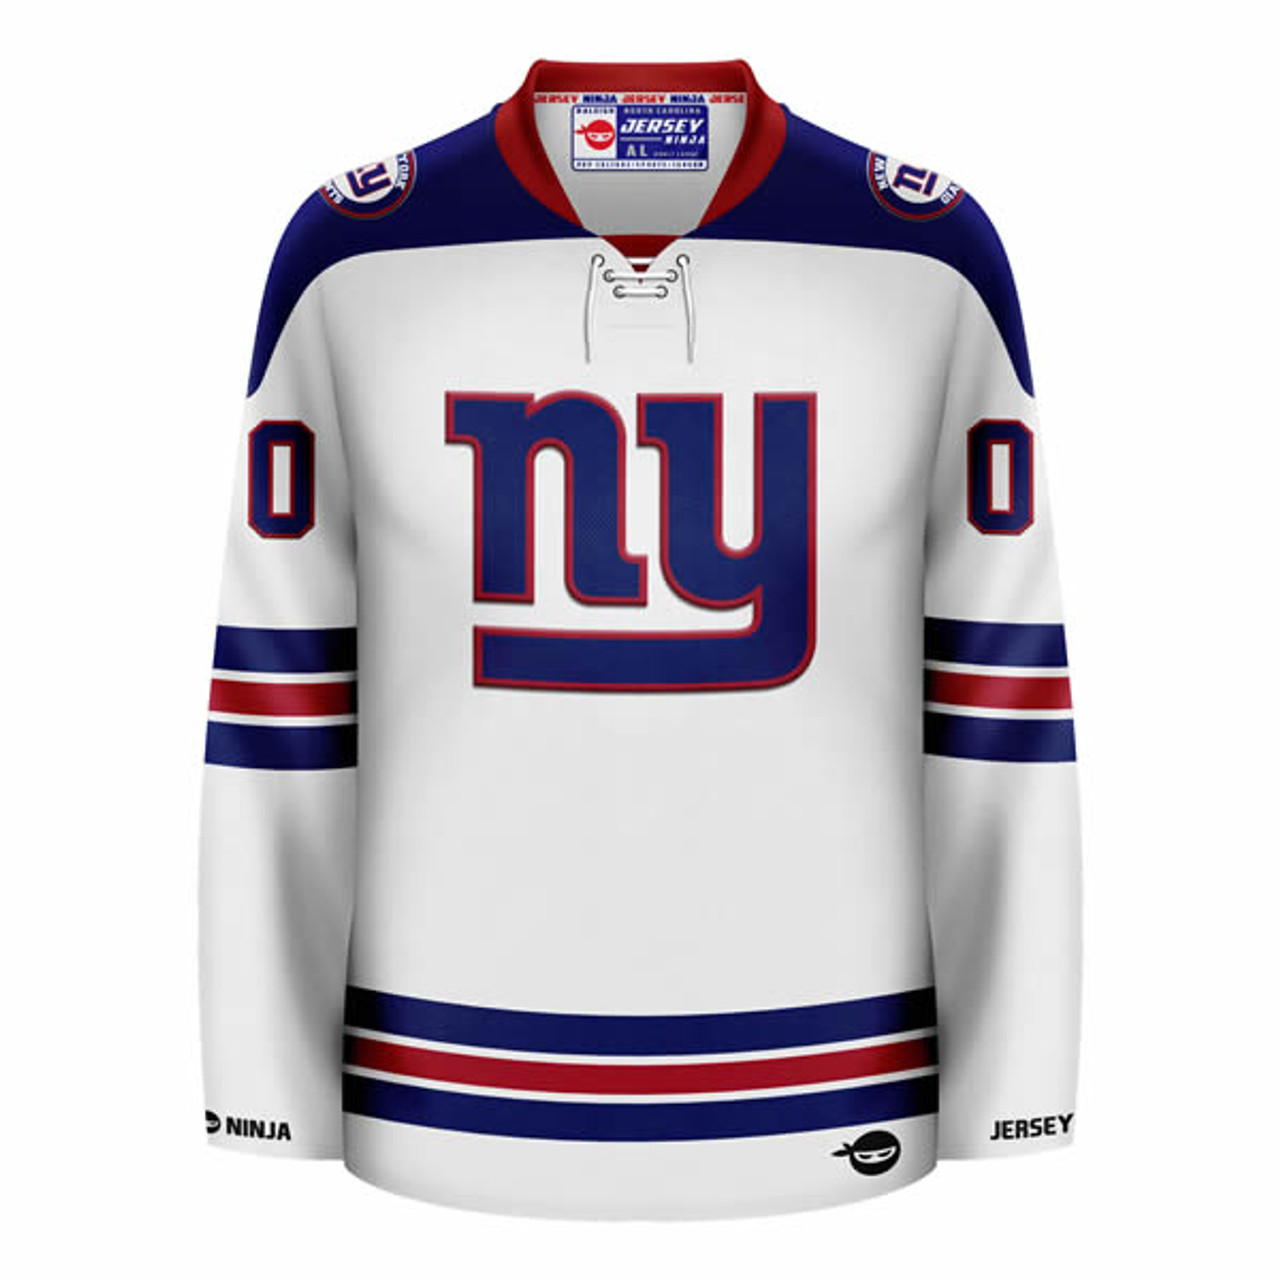 Jersey Ninja - New York Giants White Hockey Jersey